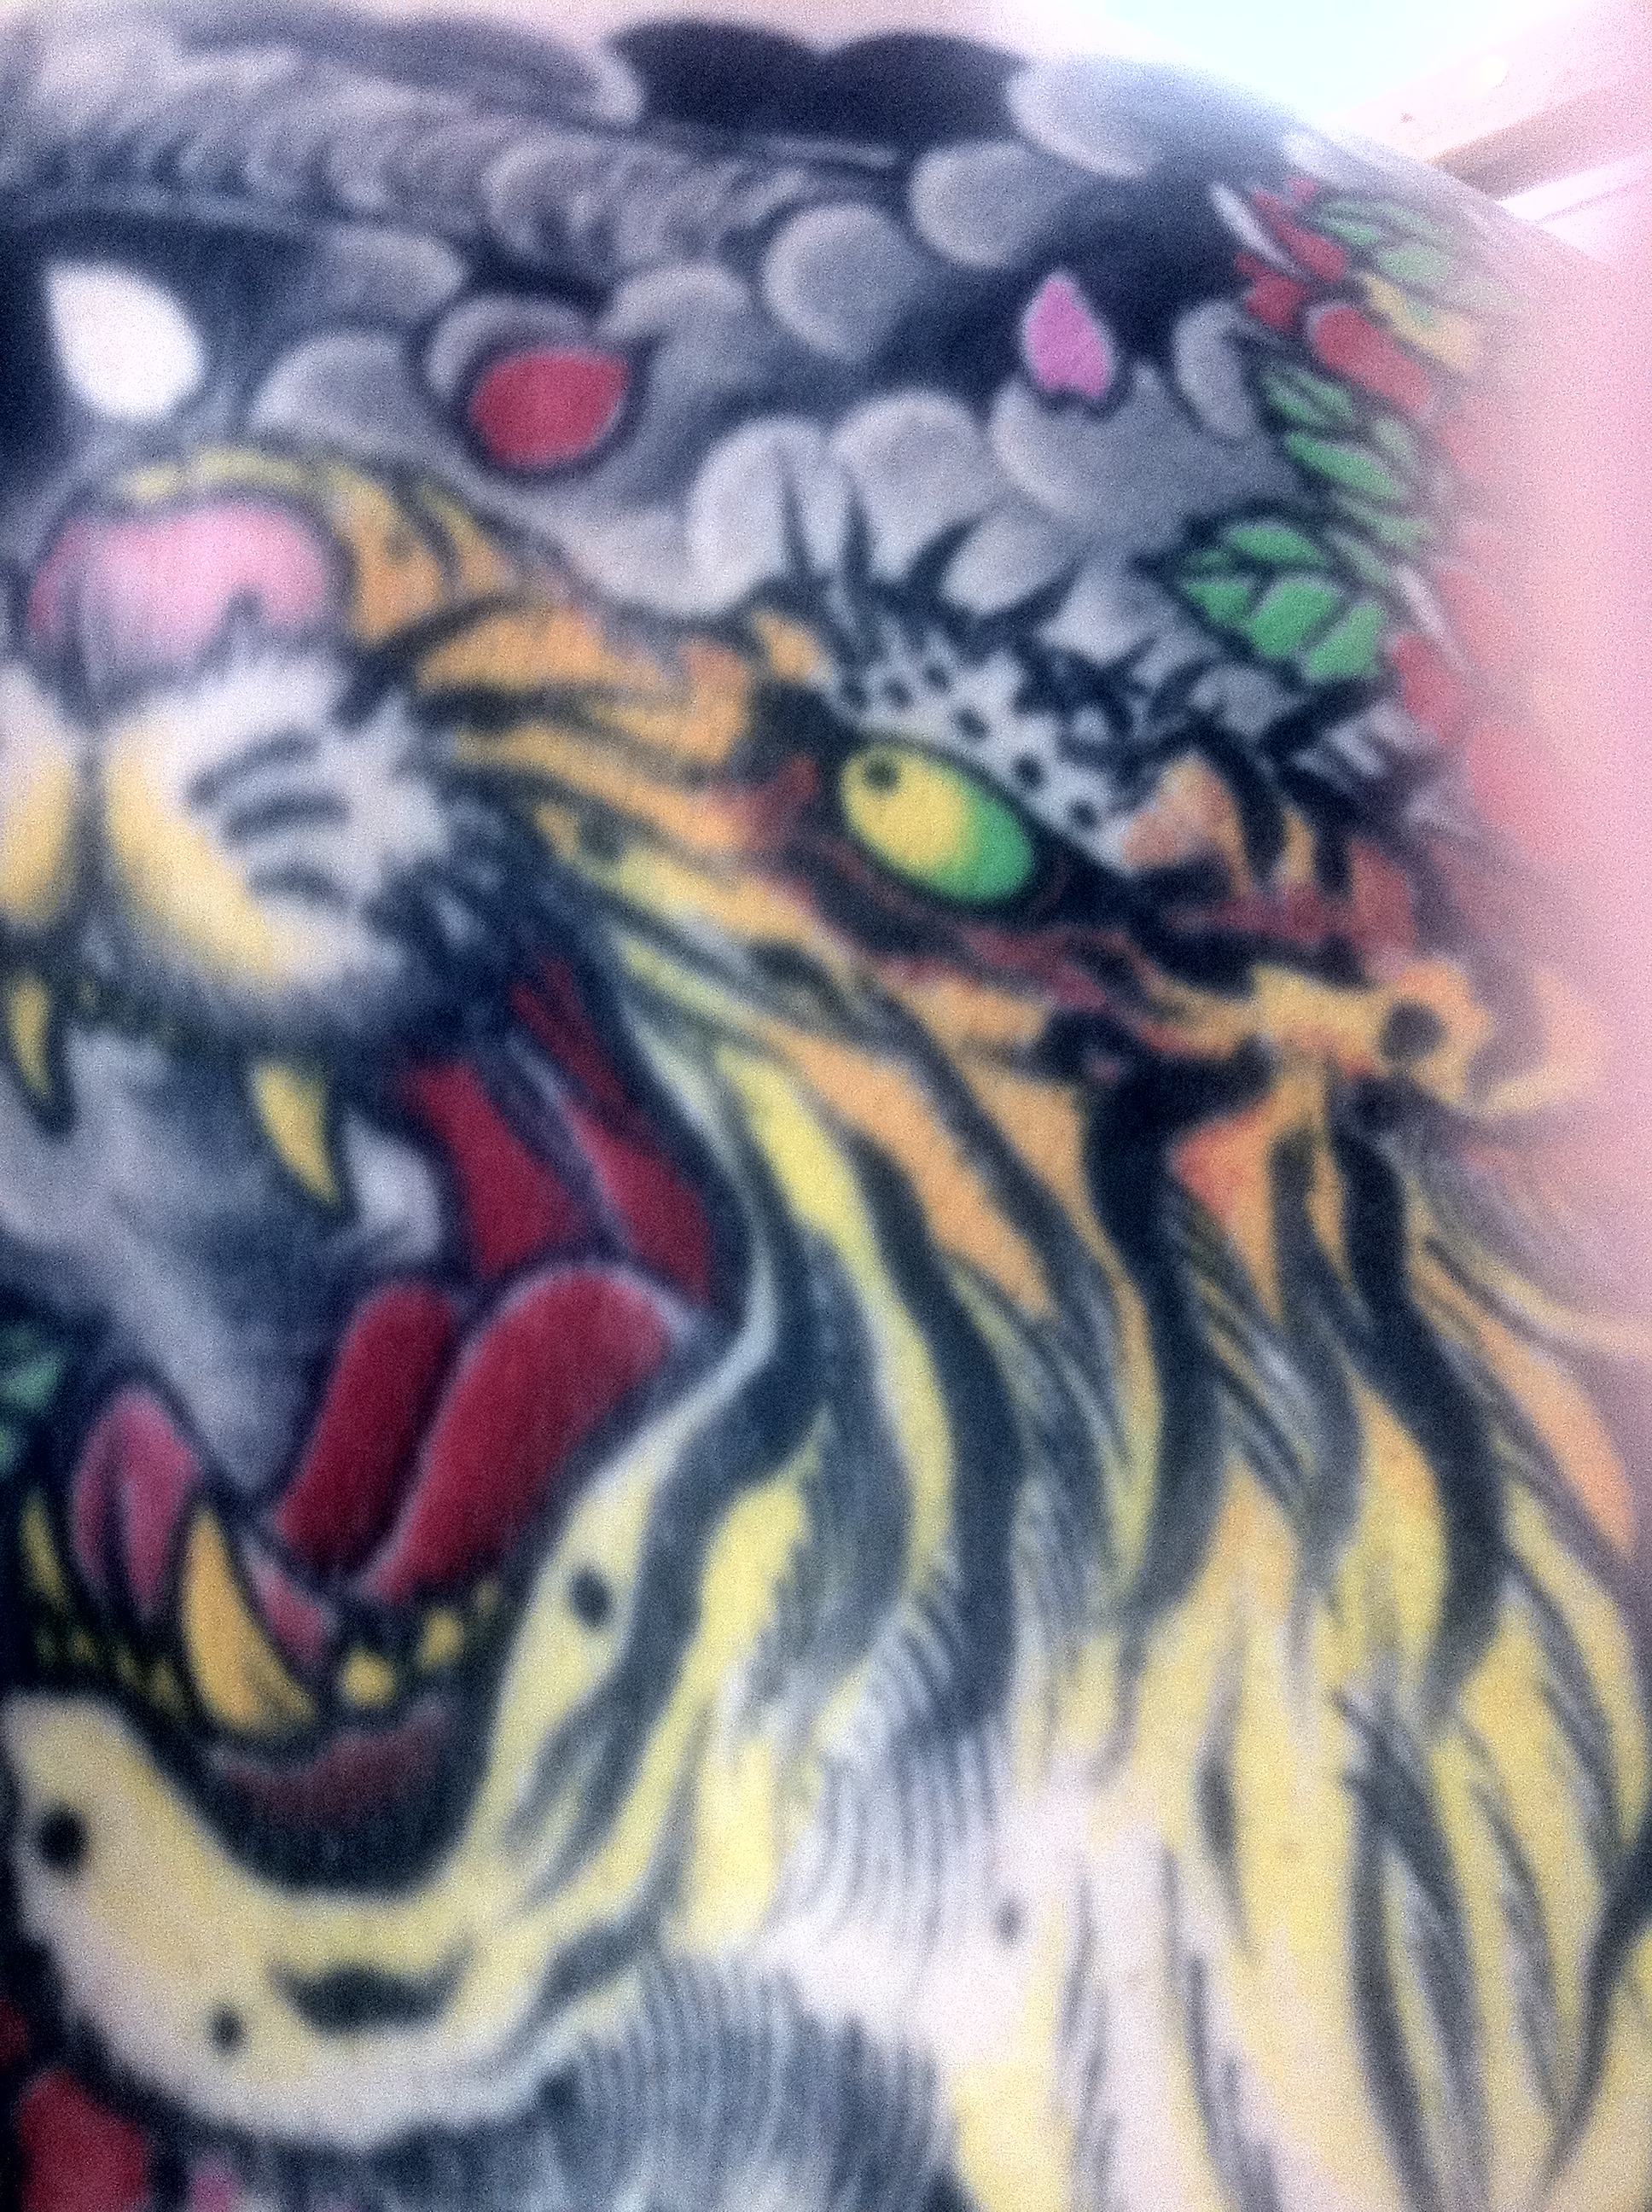 Lion tattoos for men symbolize